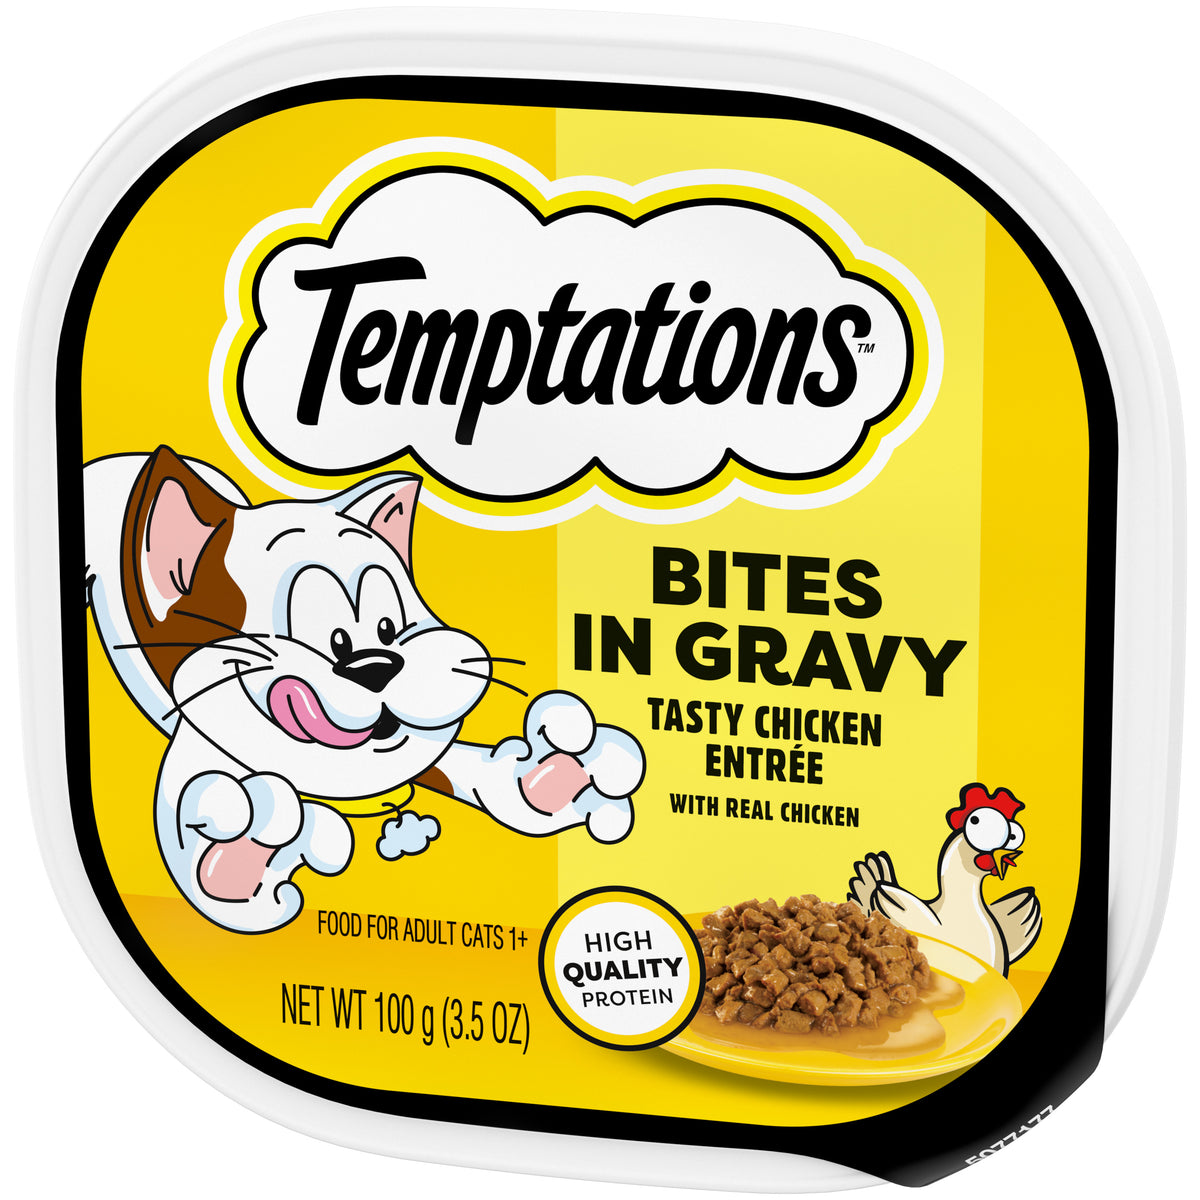 [Temptations][Temptations Wet Cat Food, Tasty Chicken Flavor Bites in Gravy, 3.5 oz. Tray][Image Center Right (3/4 Angle)]